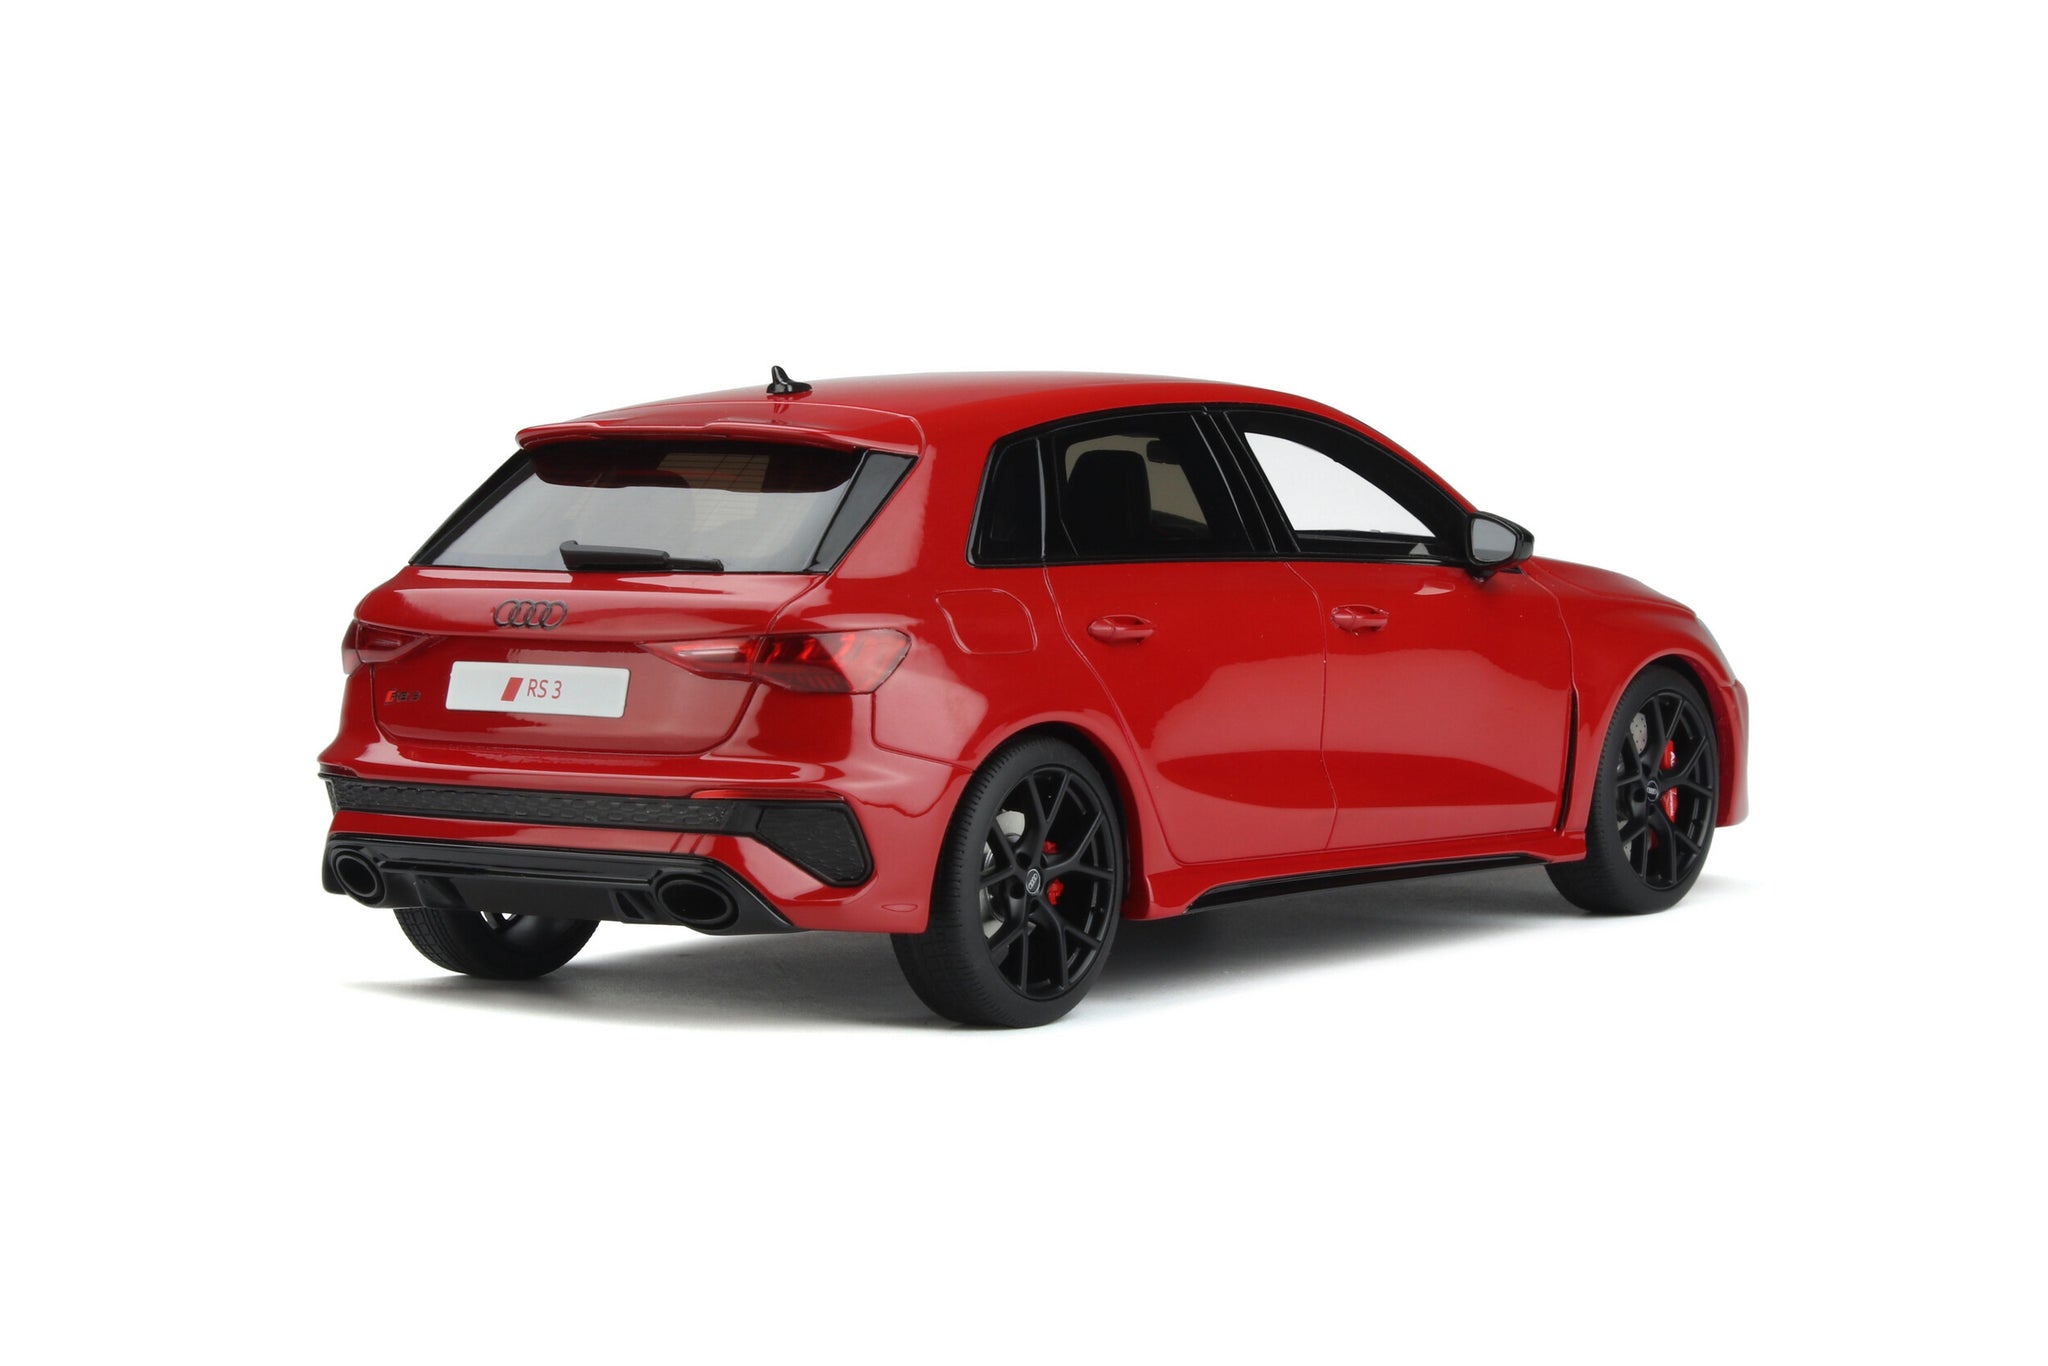 Audi A3 Sportback - info, prix, alternatives AutoScout24